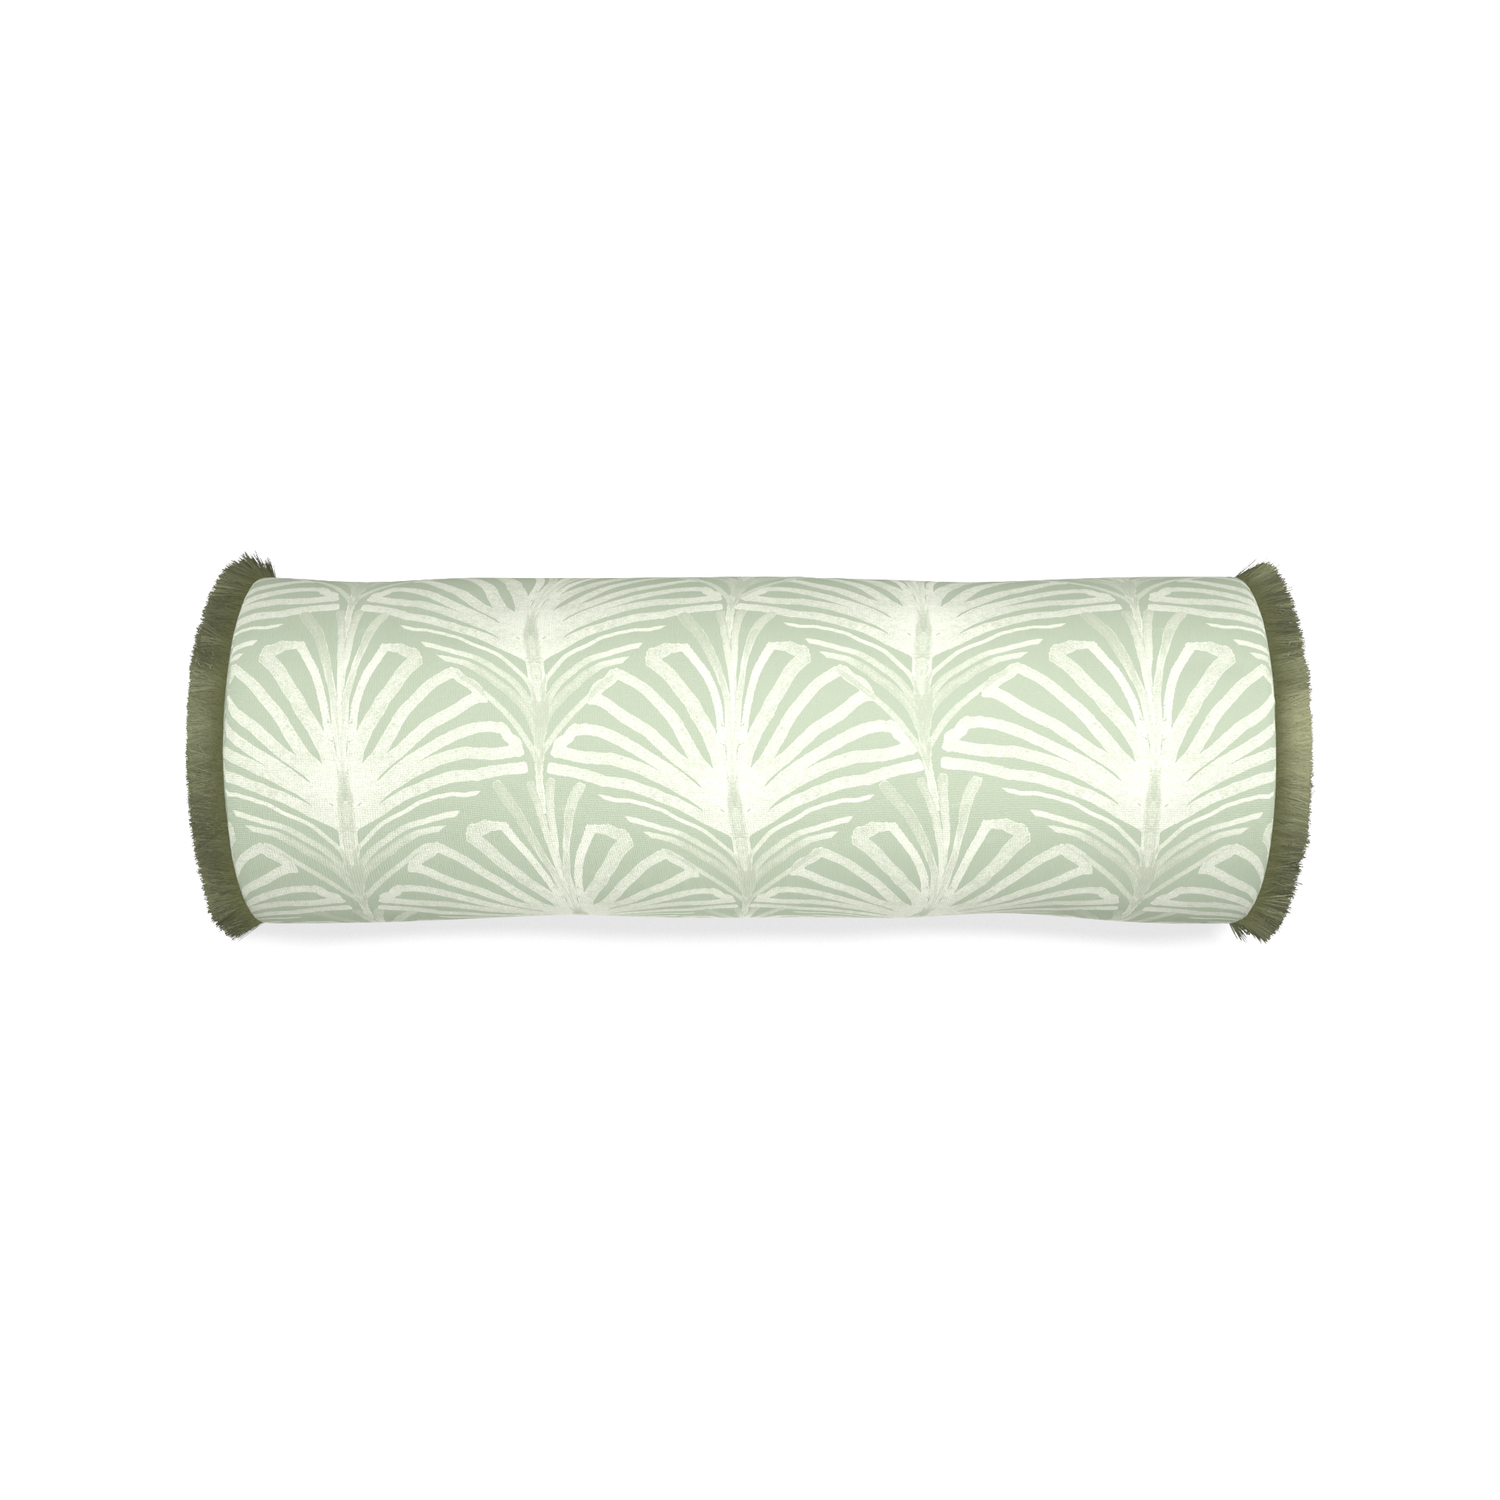 Bolster suzy sage custom sage green palmpillow with sage fringe on white background